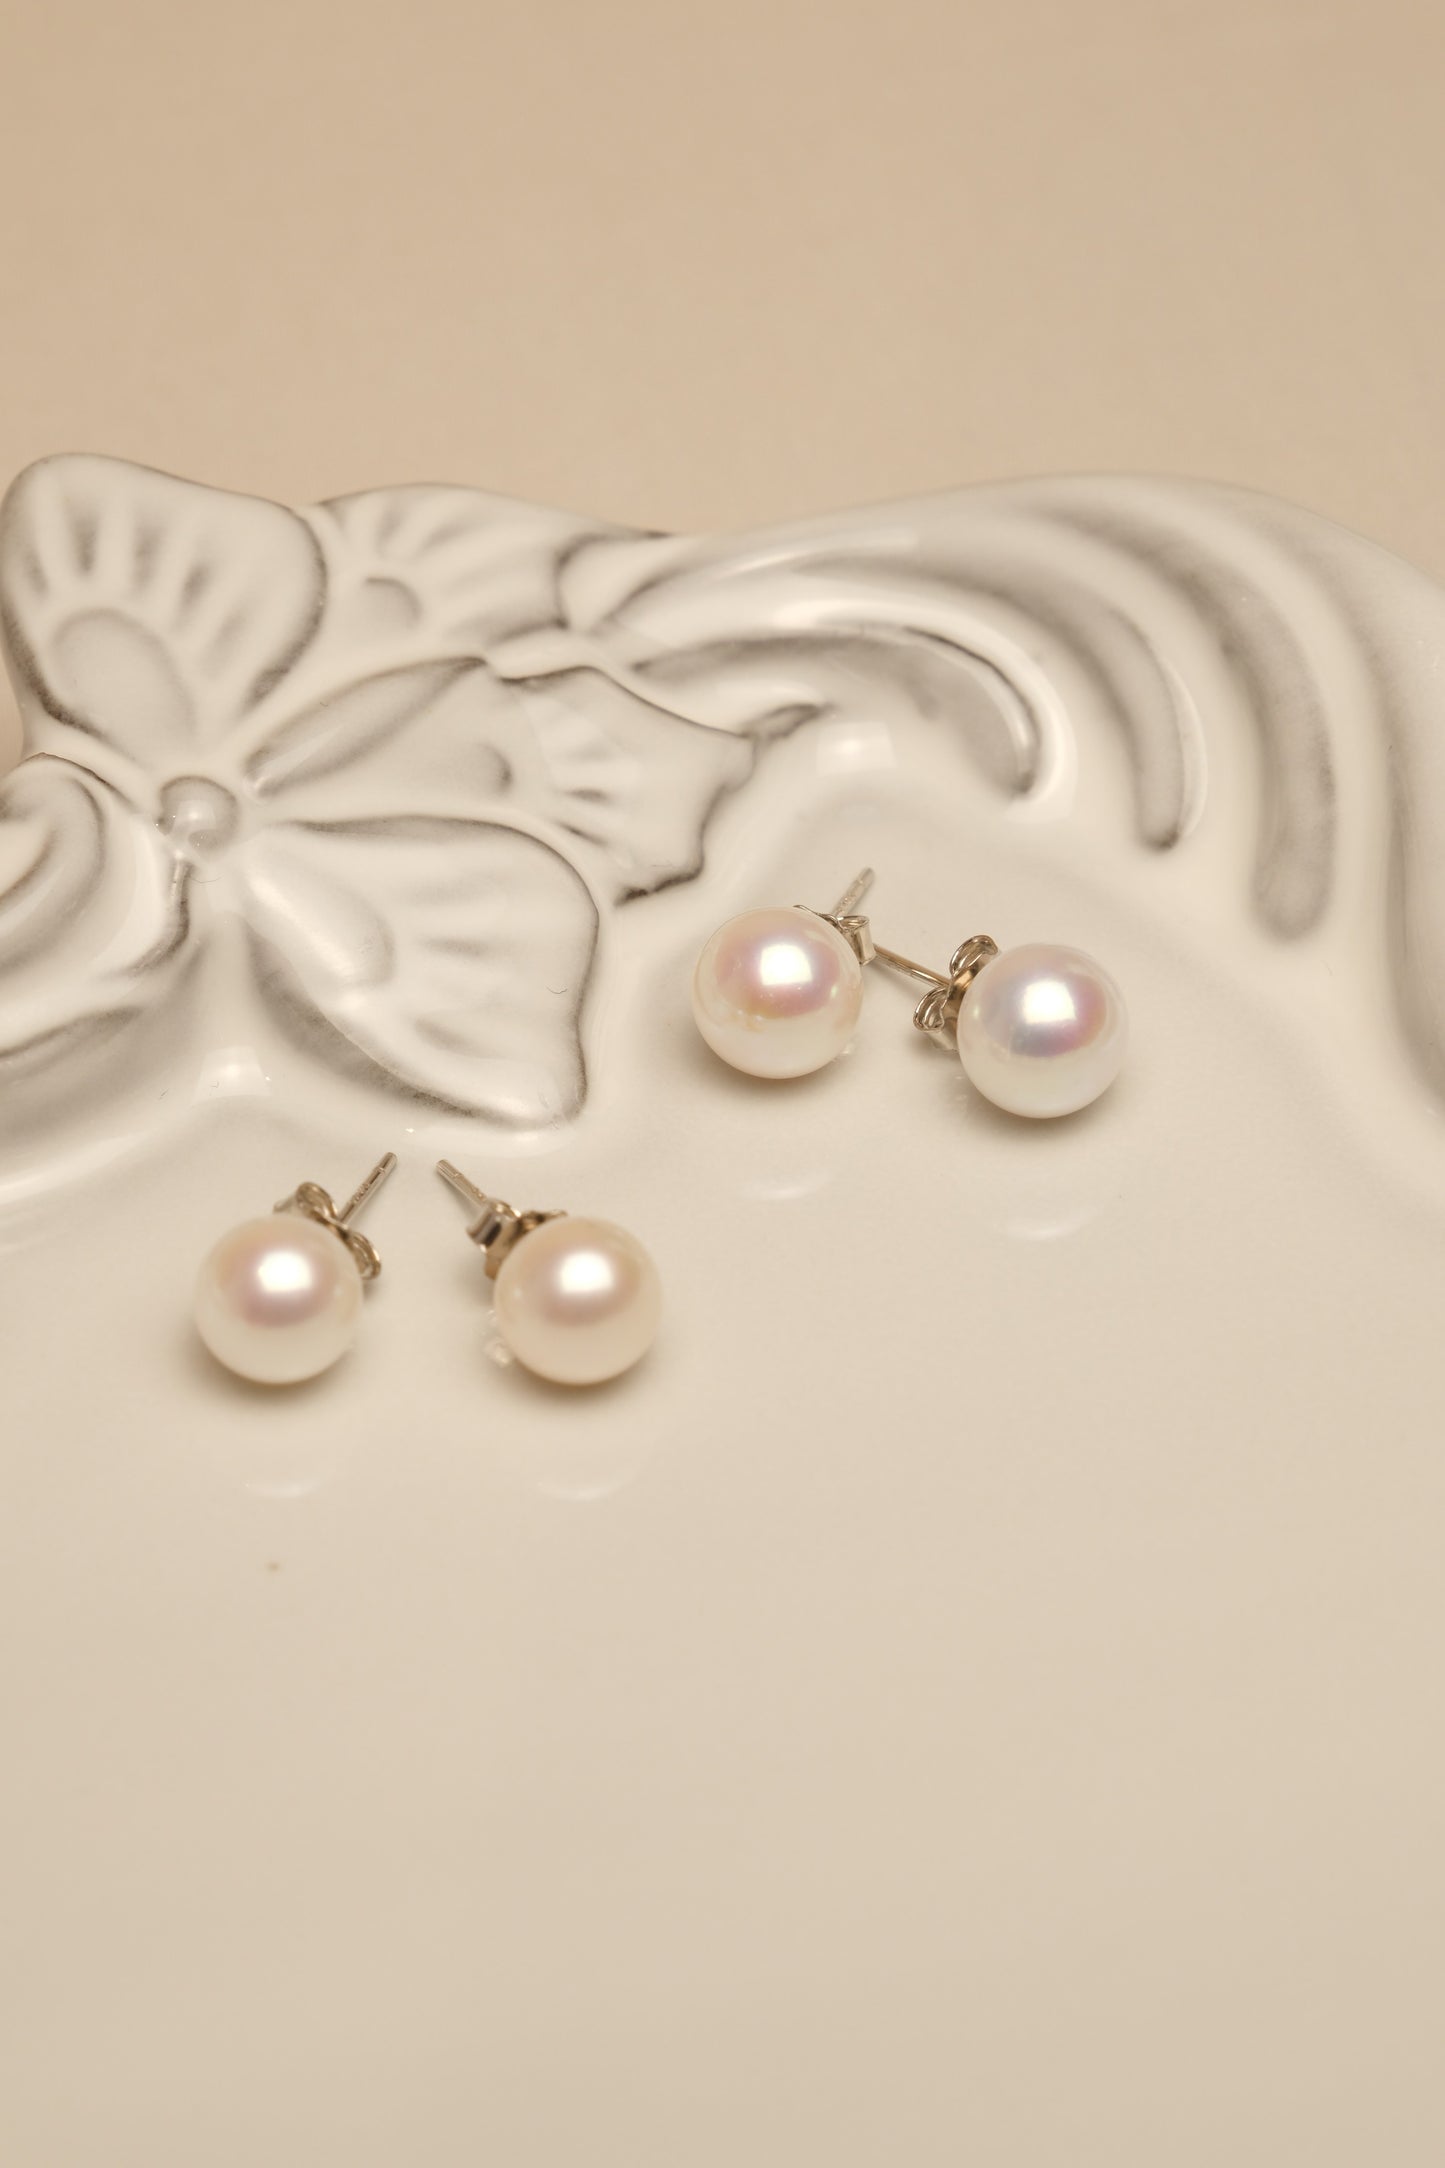 The Pearl Stud Earrings - Round shape